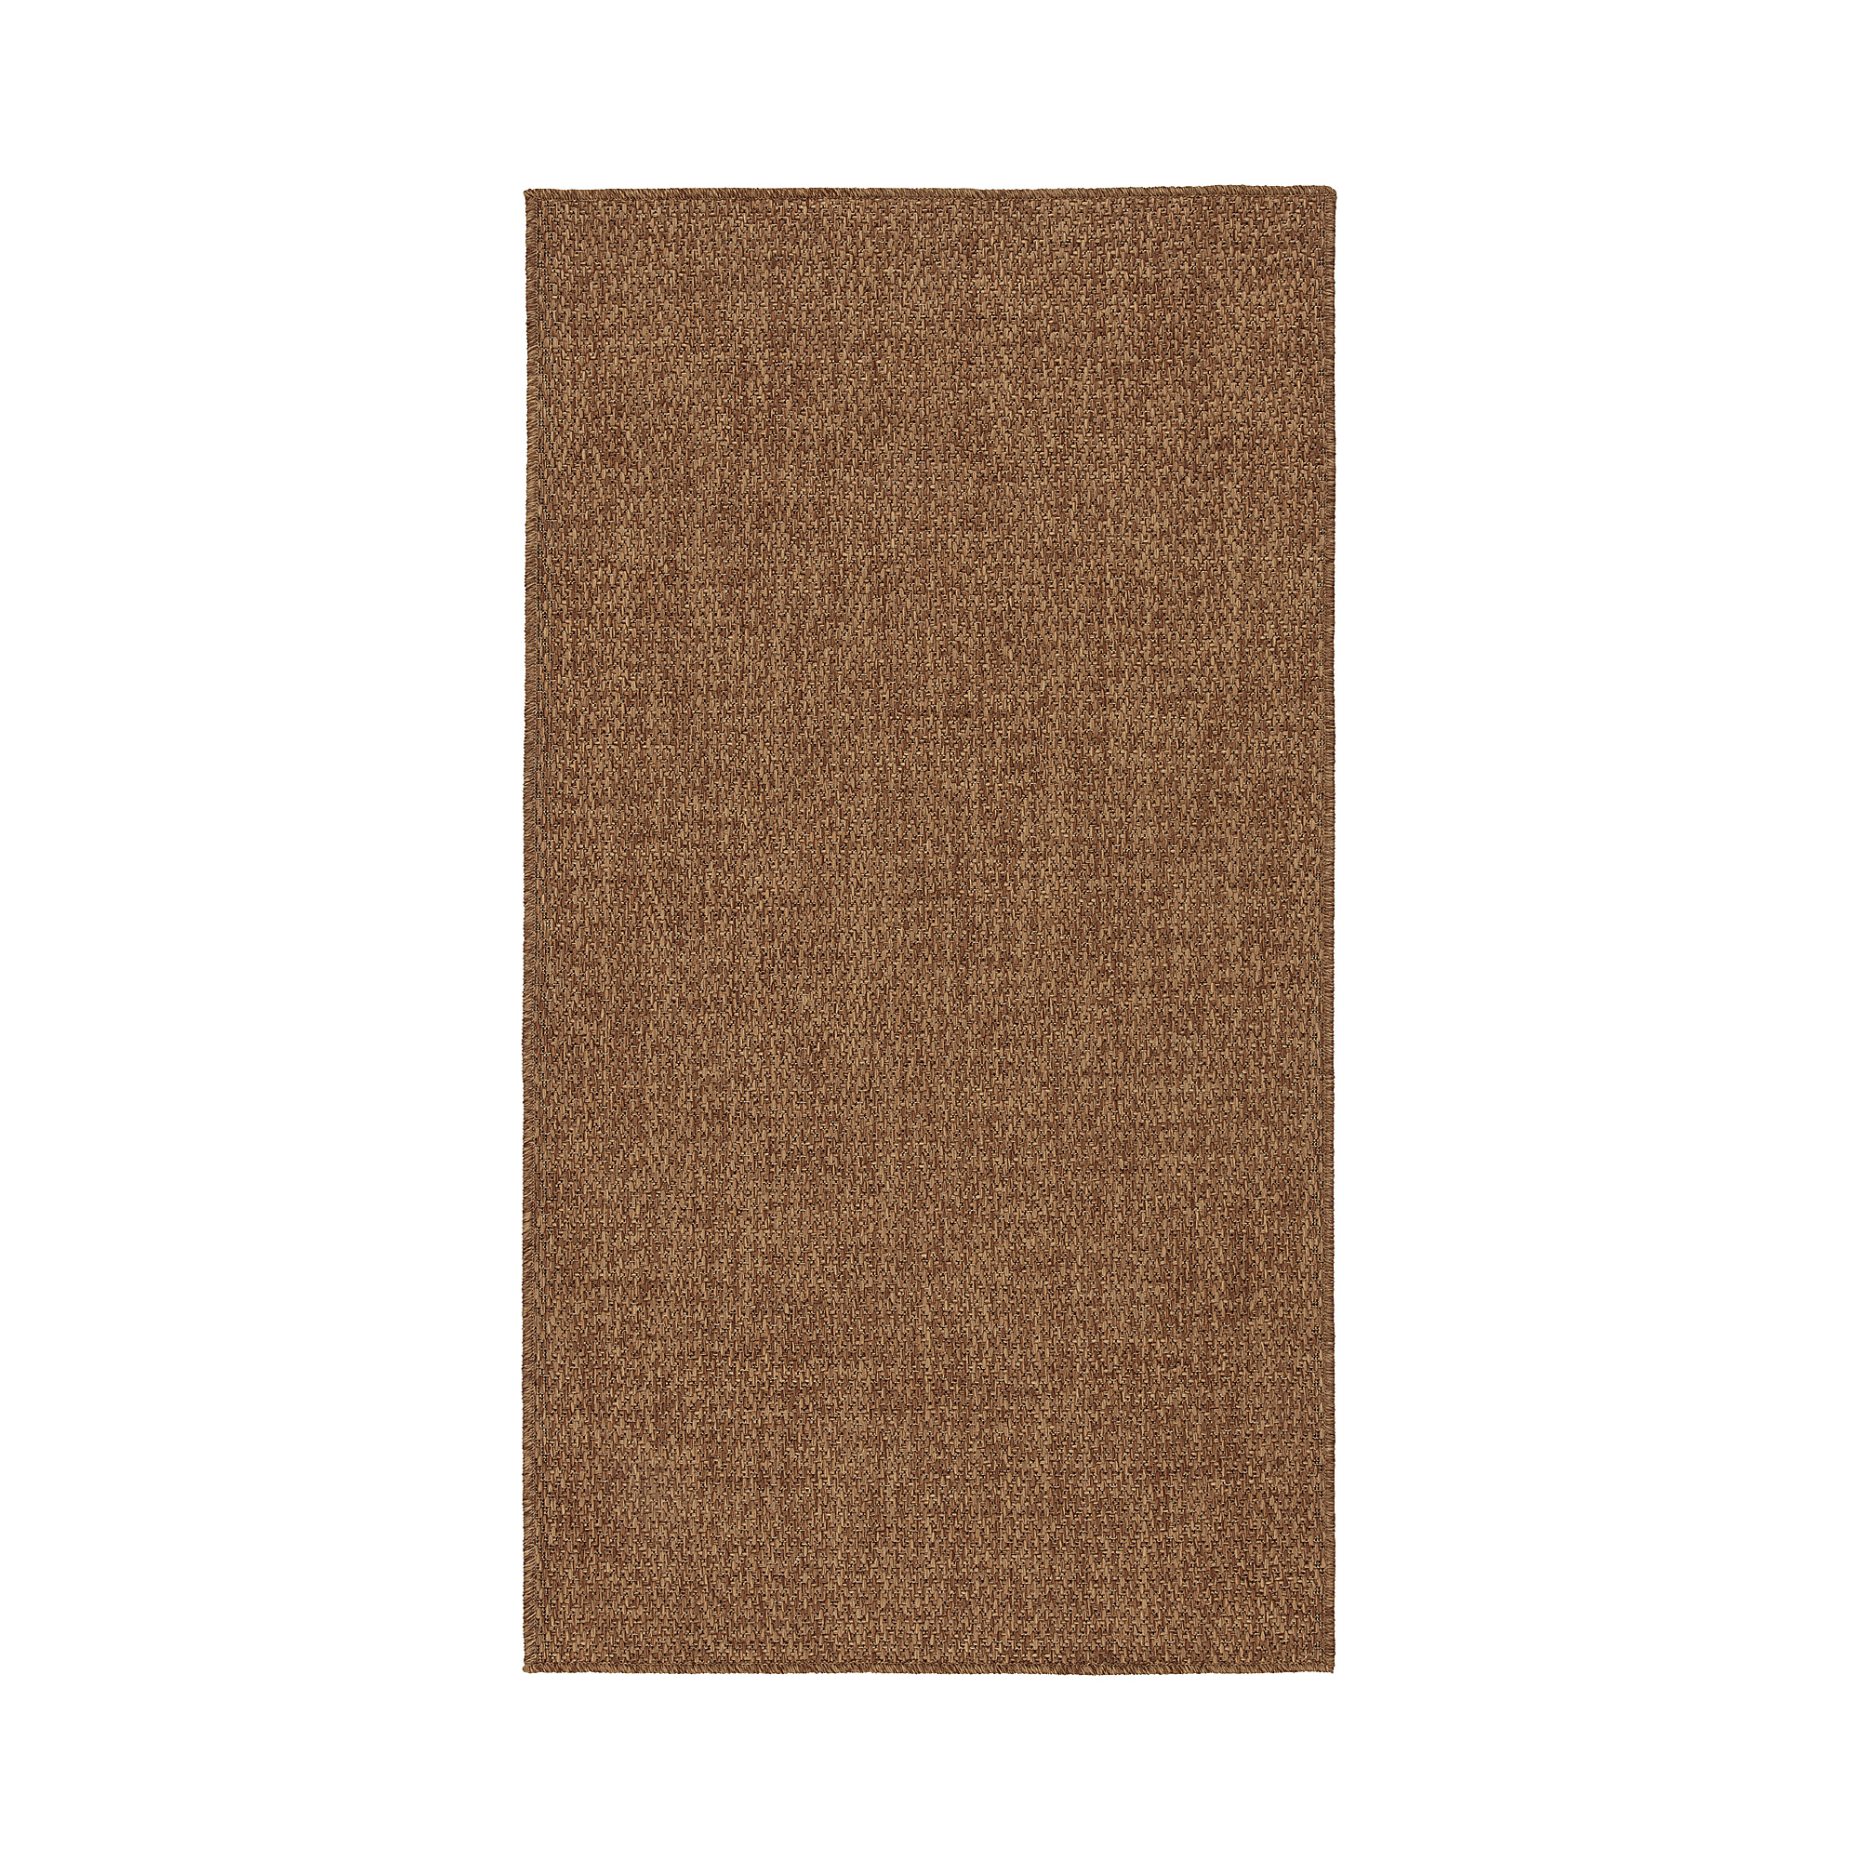 LYDERSHOLM, χαλί χαμηλή πλέξη, εσωτερικού/εξωτερικού χώρου, 80x150 cm, 504.953.91